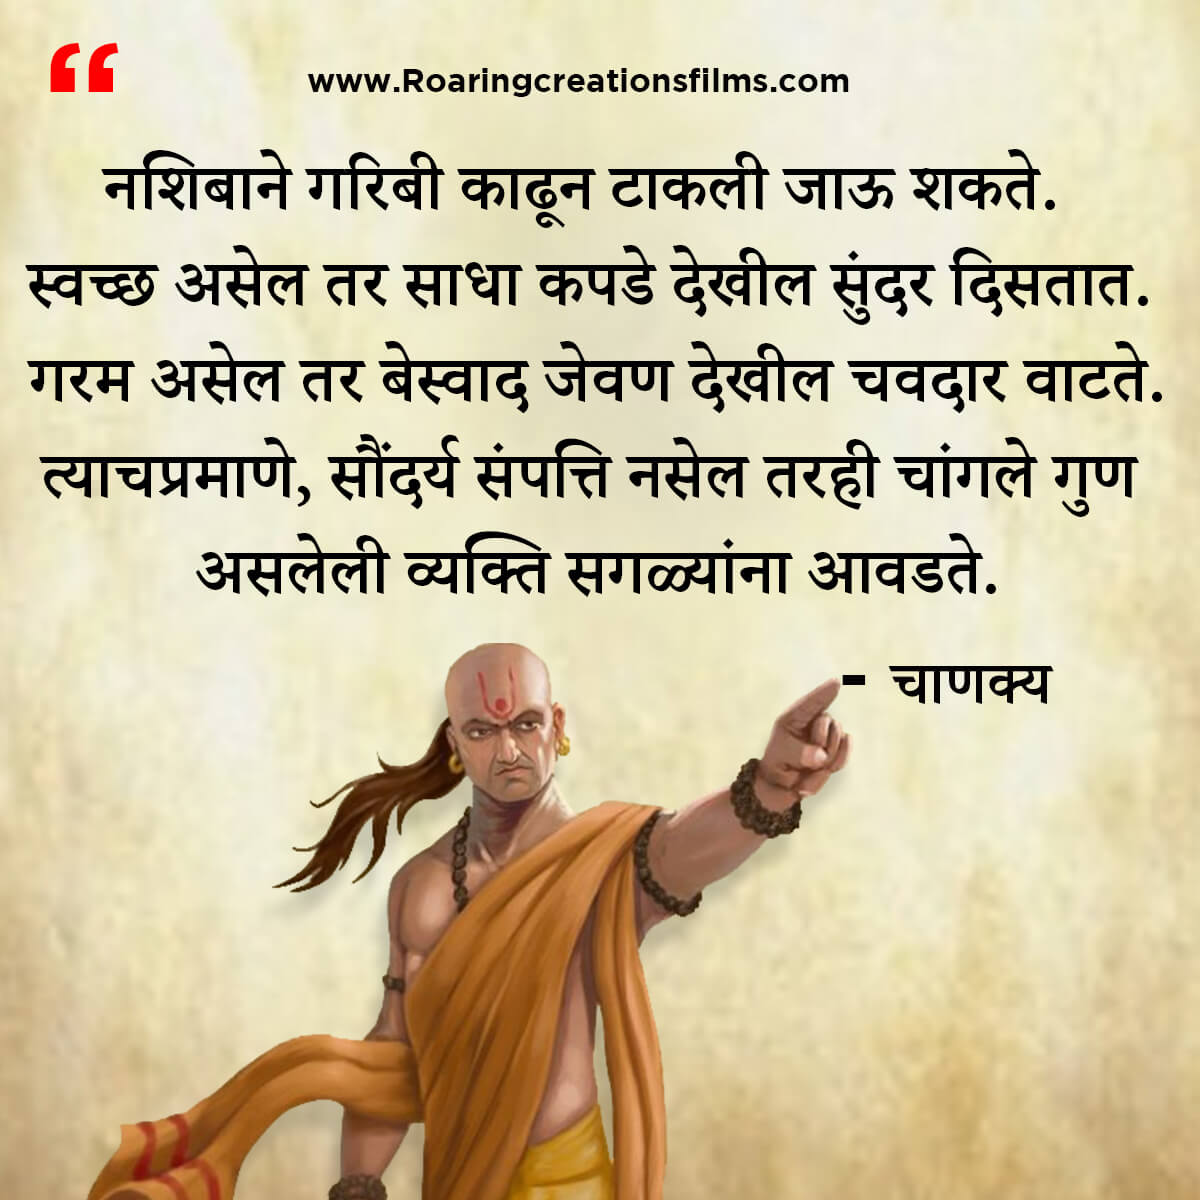 चाणक्य नीति मराठी - Chanakya Niti in Marathi - एकूण चाणक्य धोरण - Chanakya Quotes in Marathi